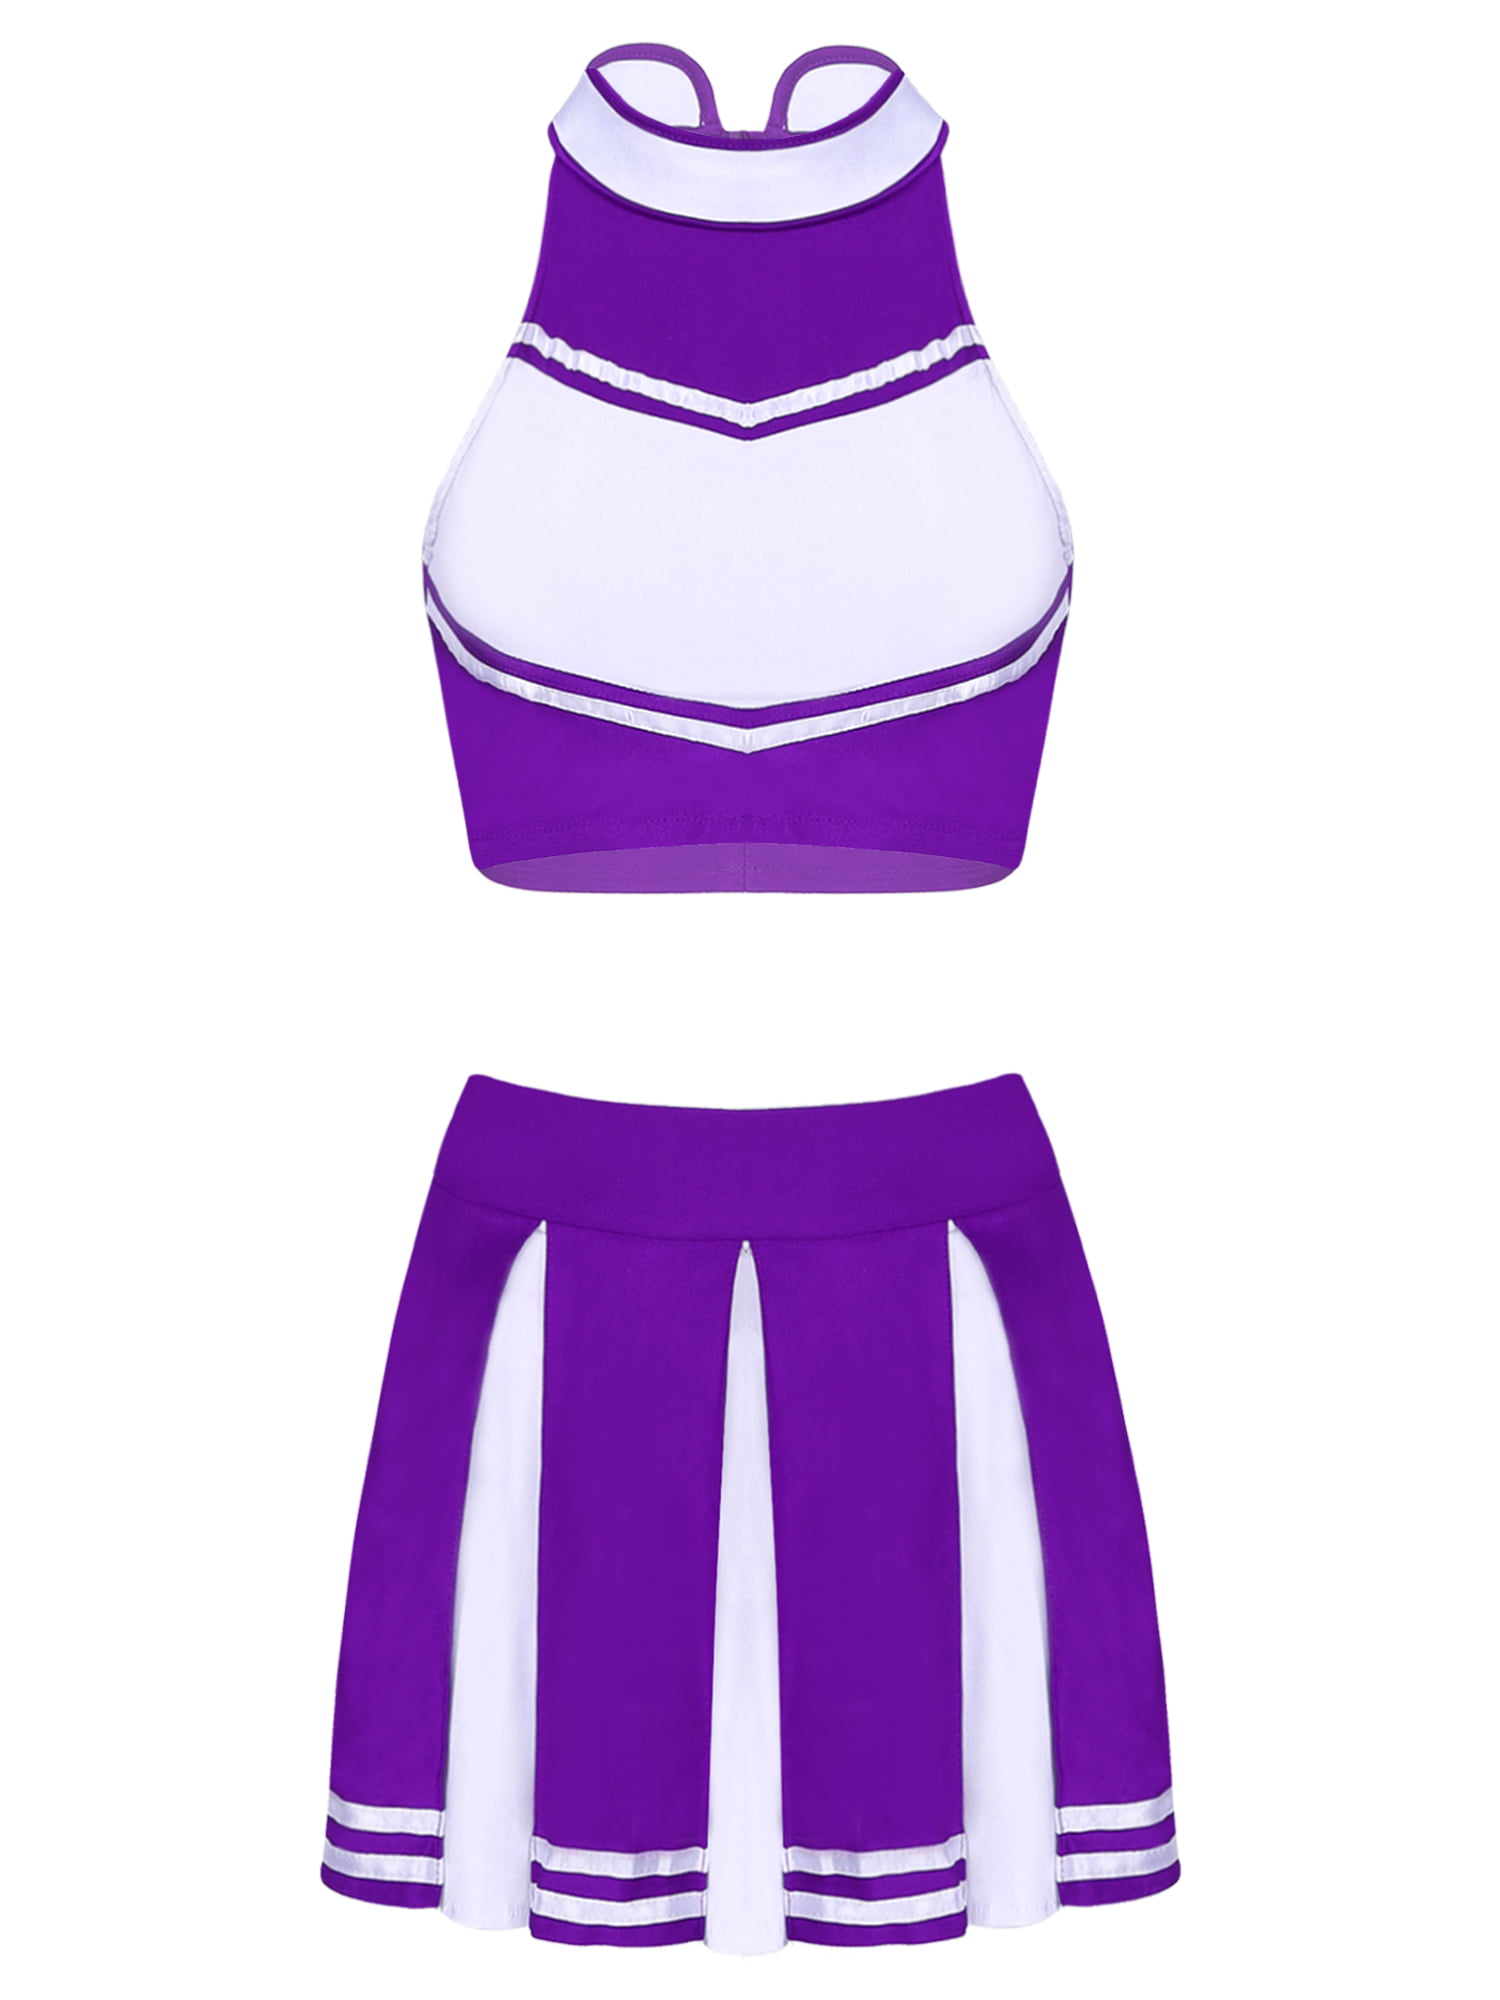 Ladies Shorty Short Purple, Covalent Activewear Women Cheerleading Dance